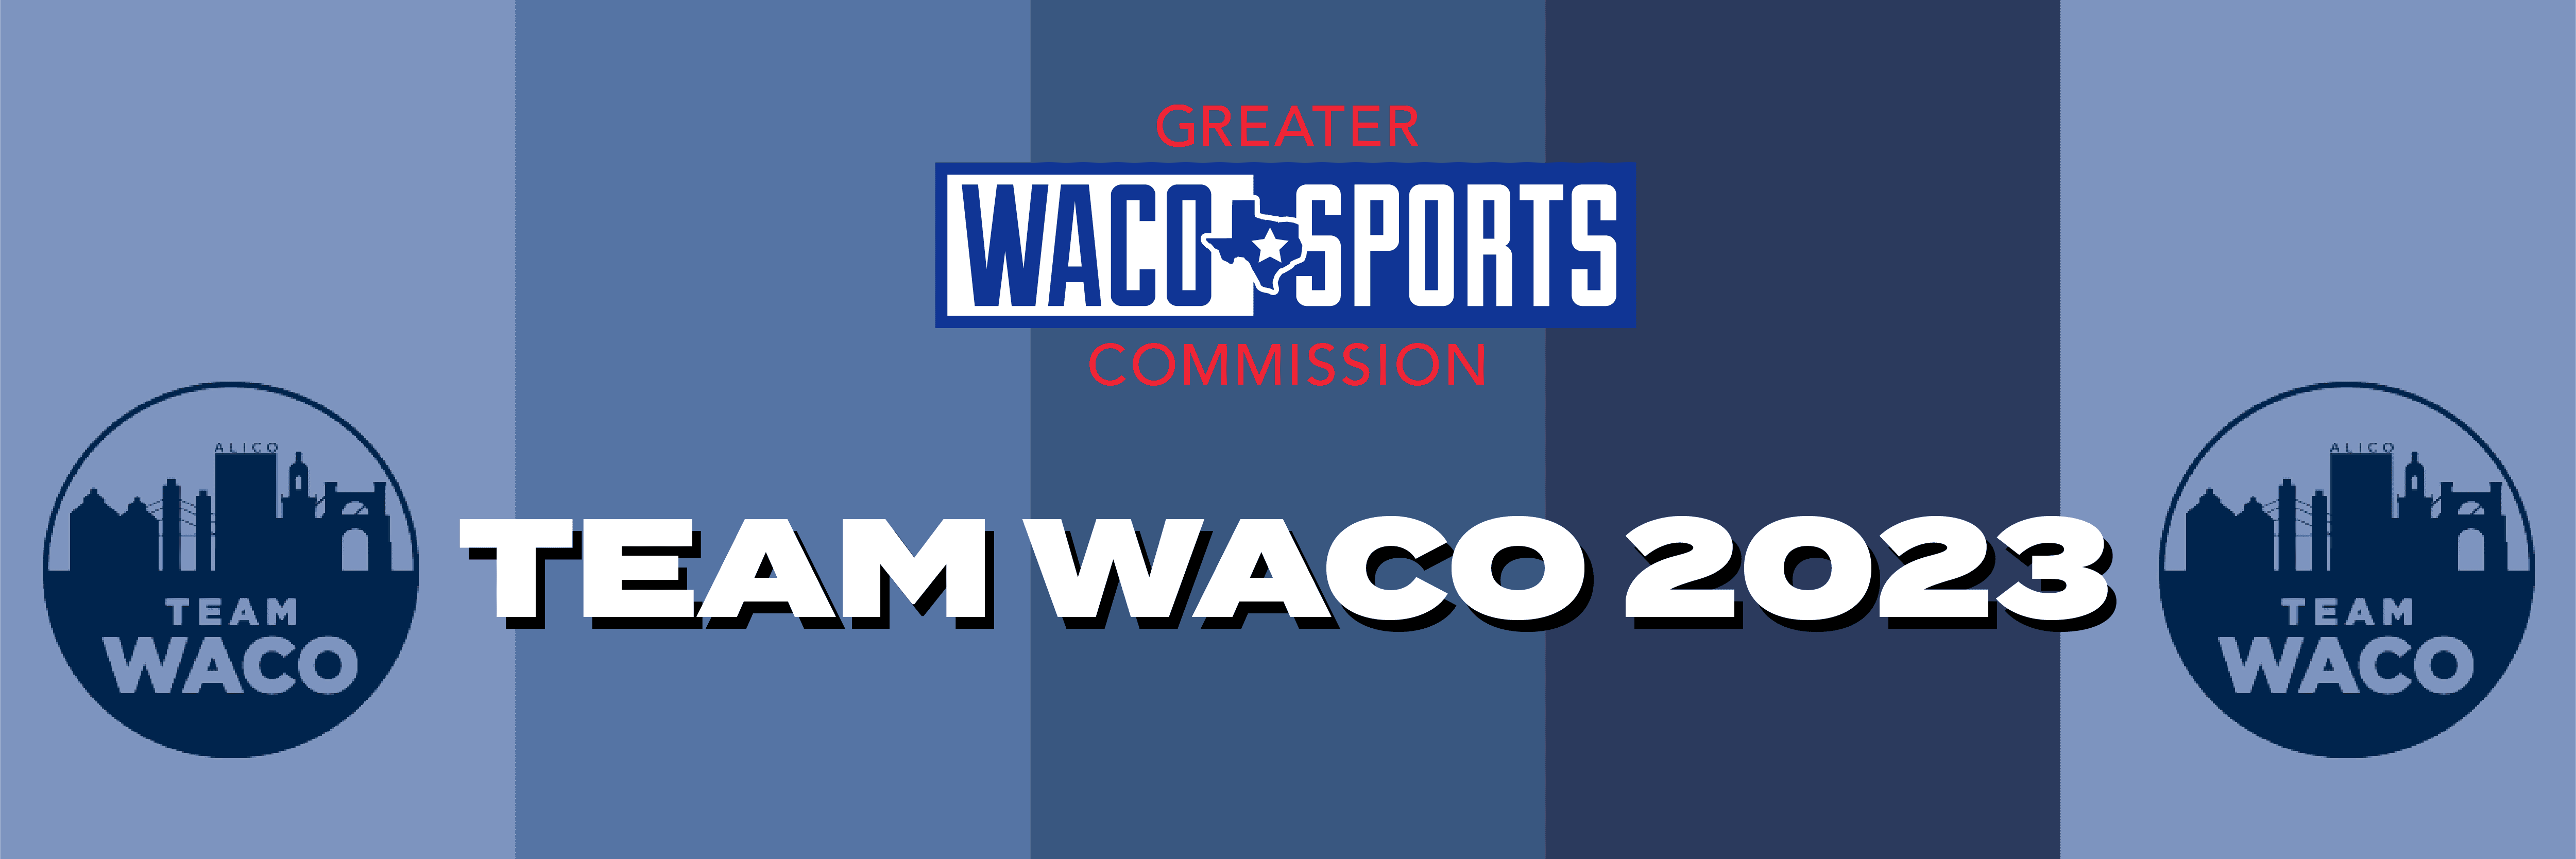 WacoSports-WacoTeam2023